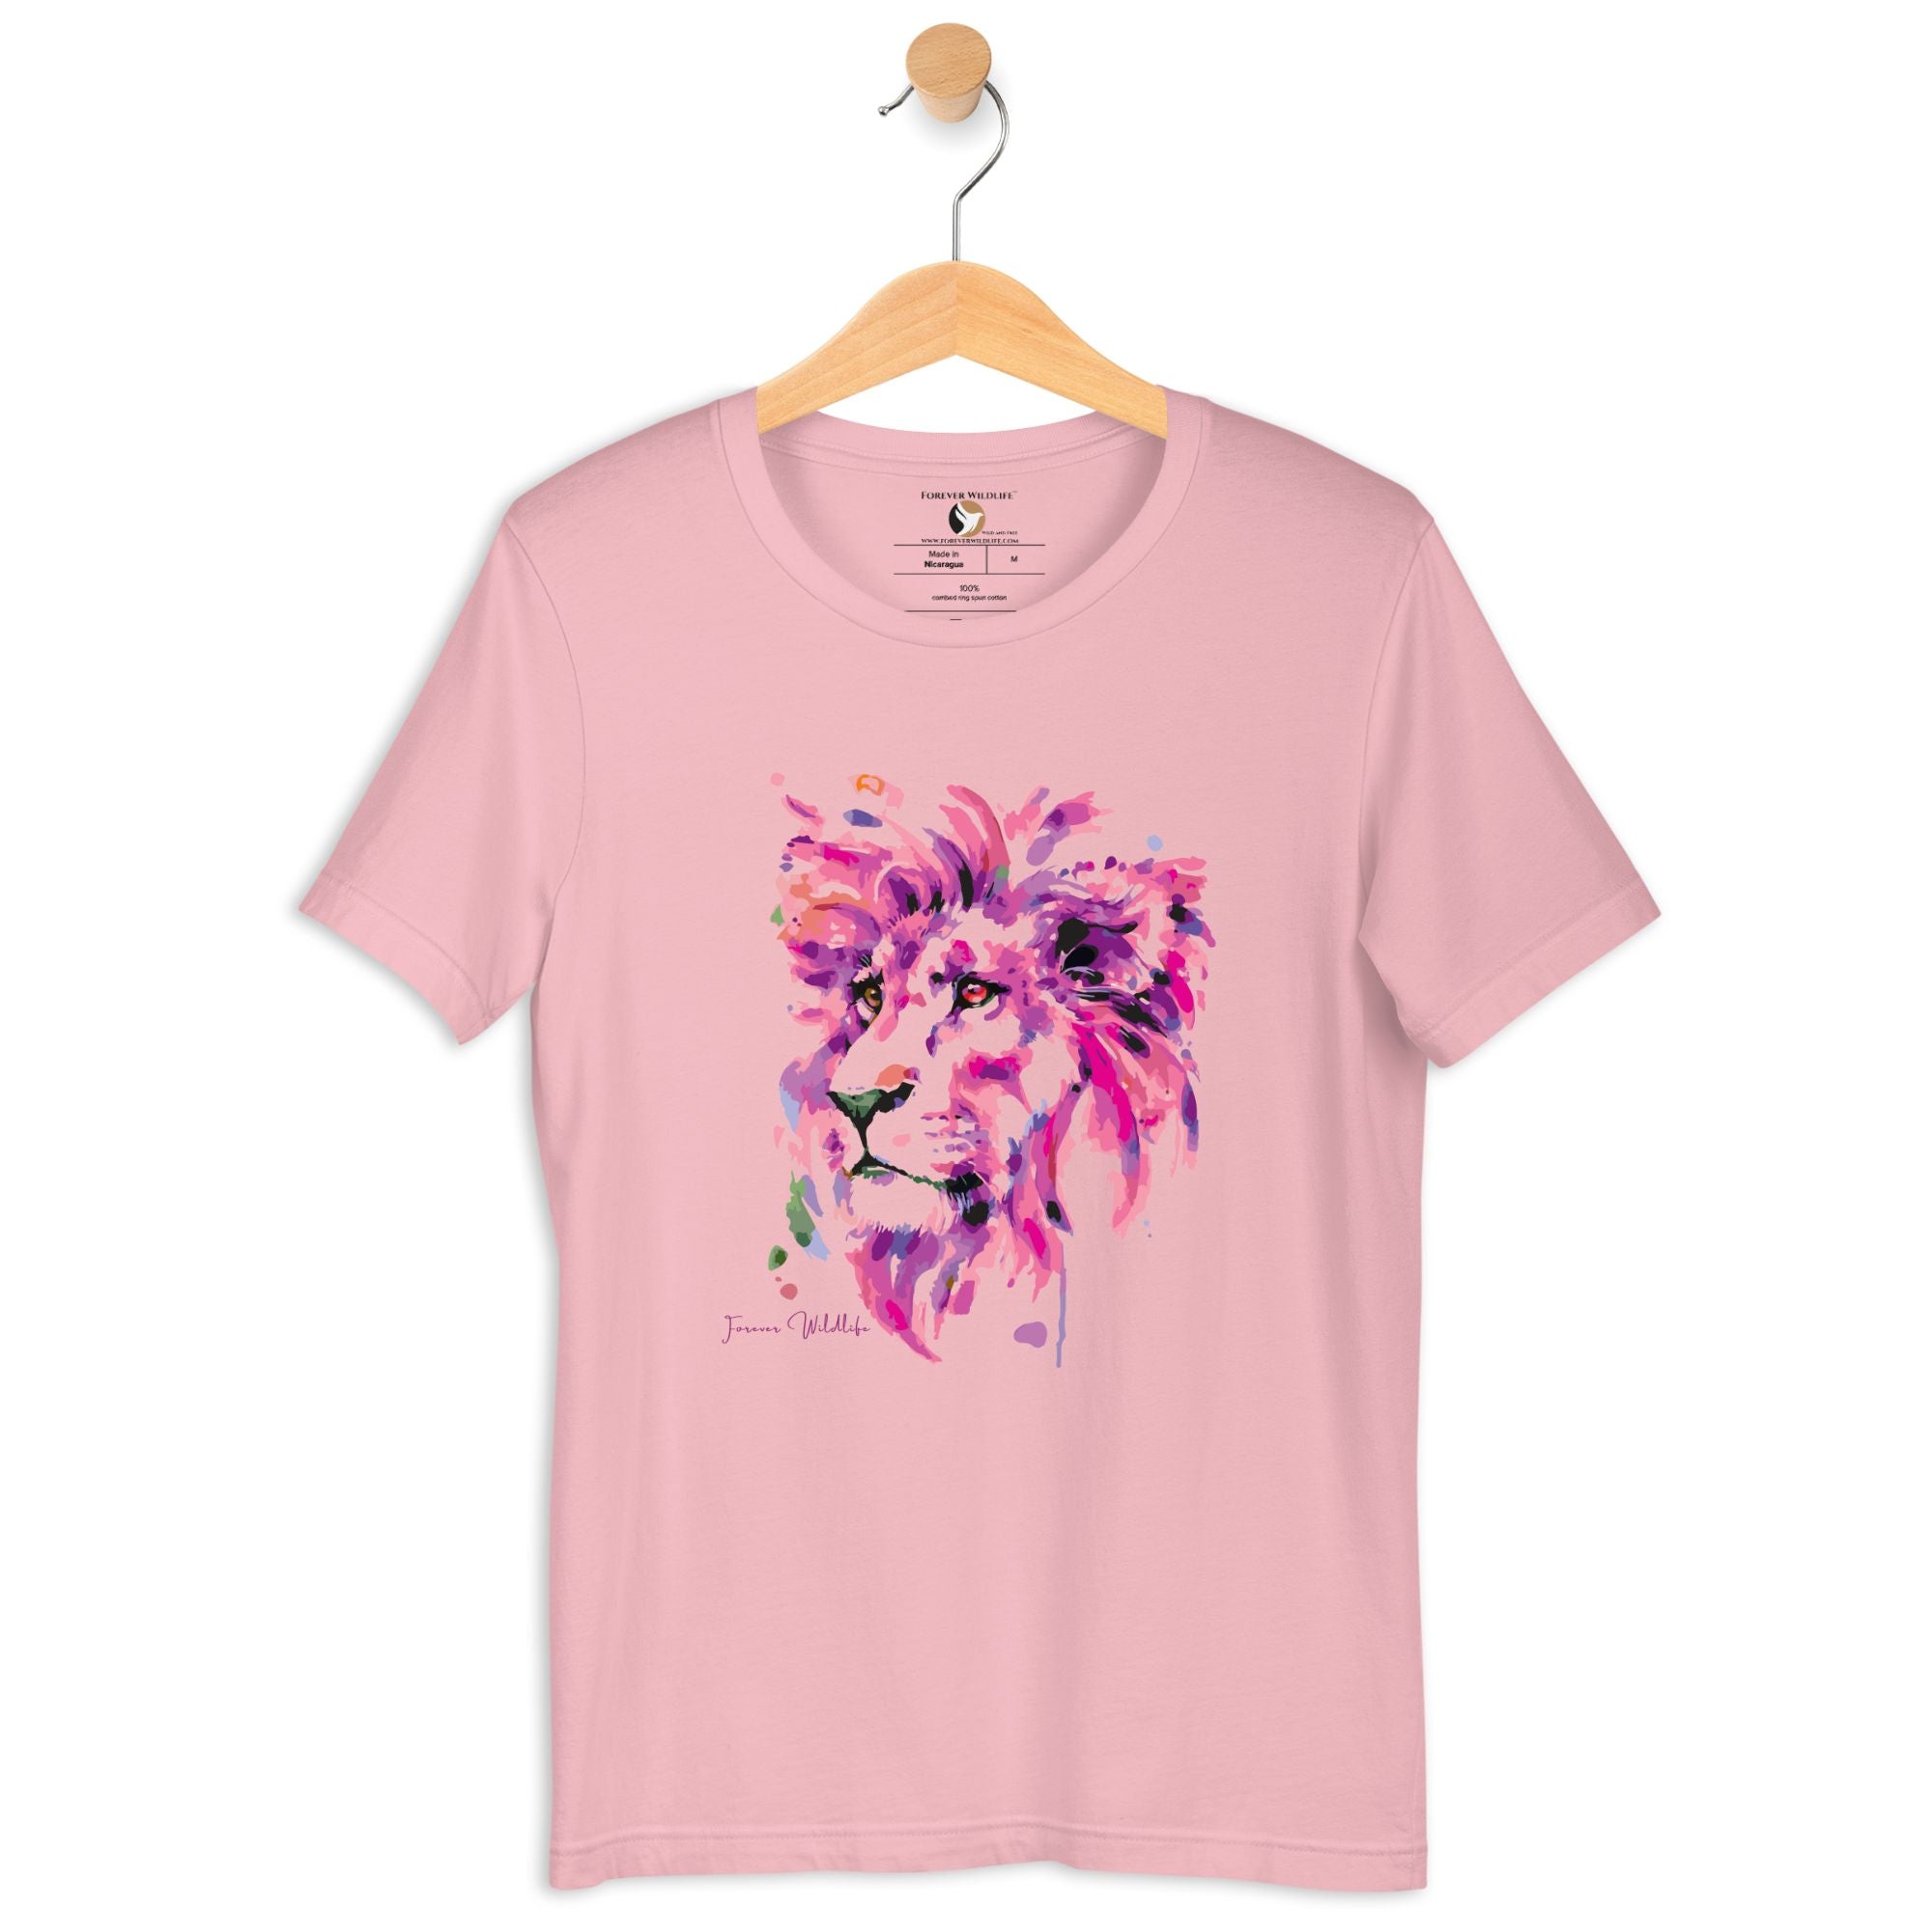 Lion T-Shirt in Pink – Premium Wildlife T-Shirt Design, Wildlife Clothing & Apparel from Forever Wildlife